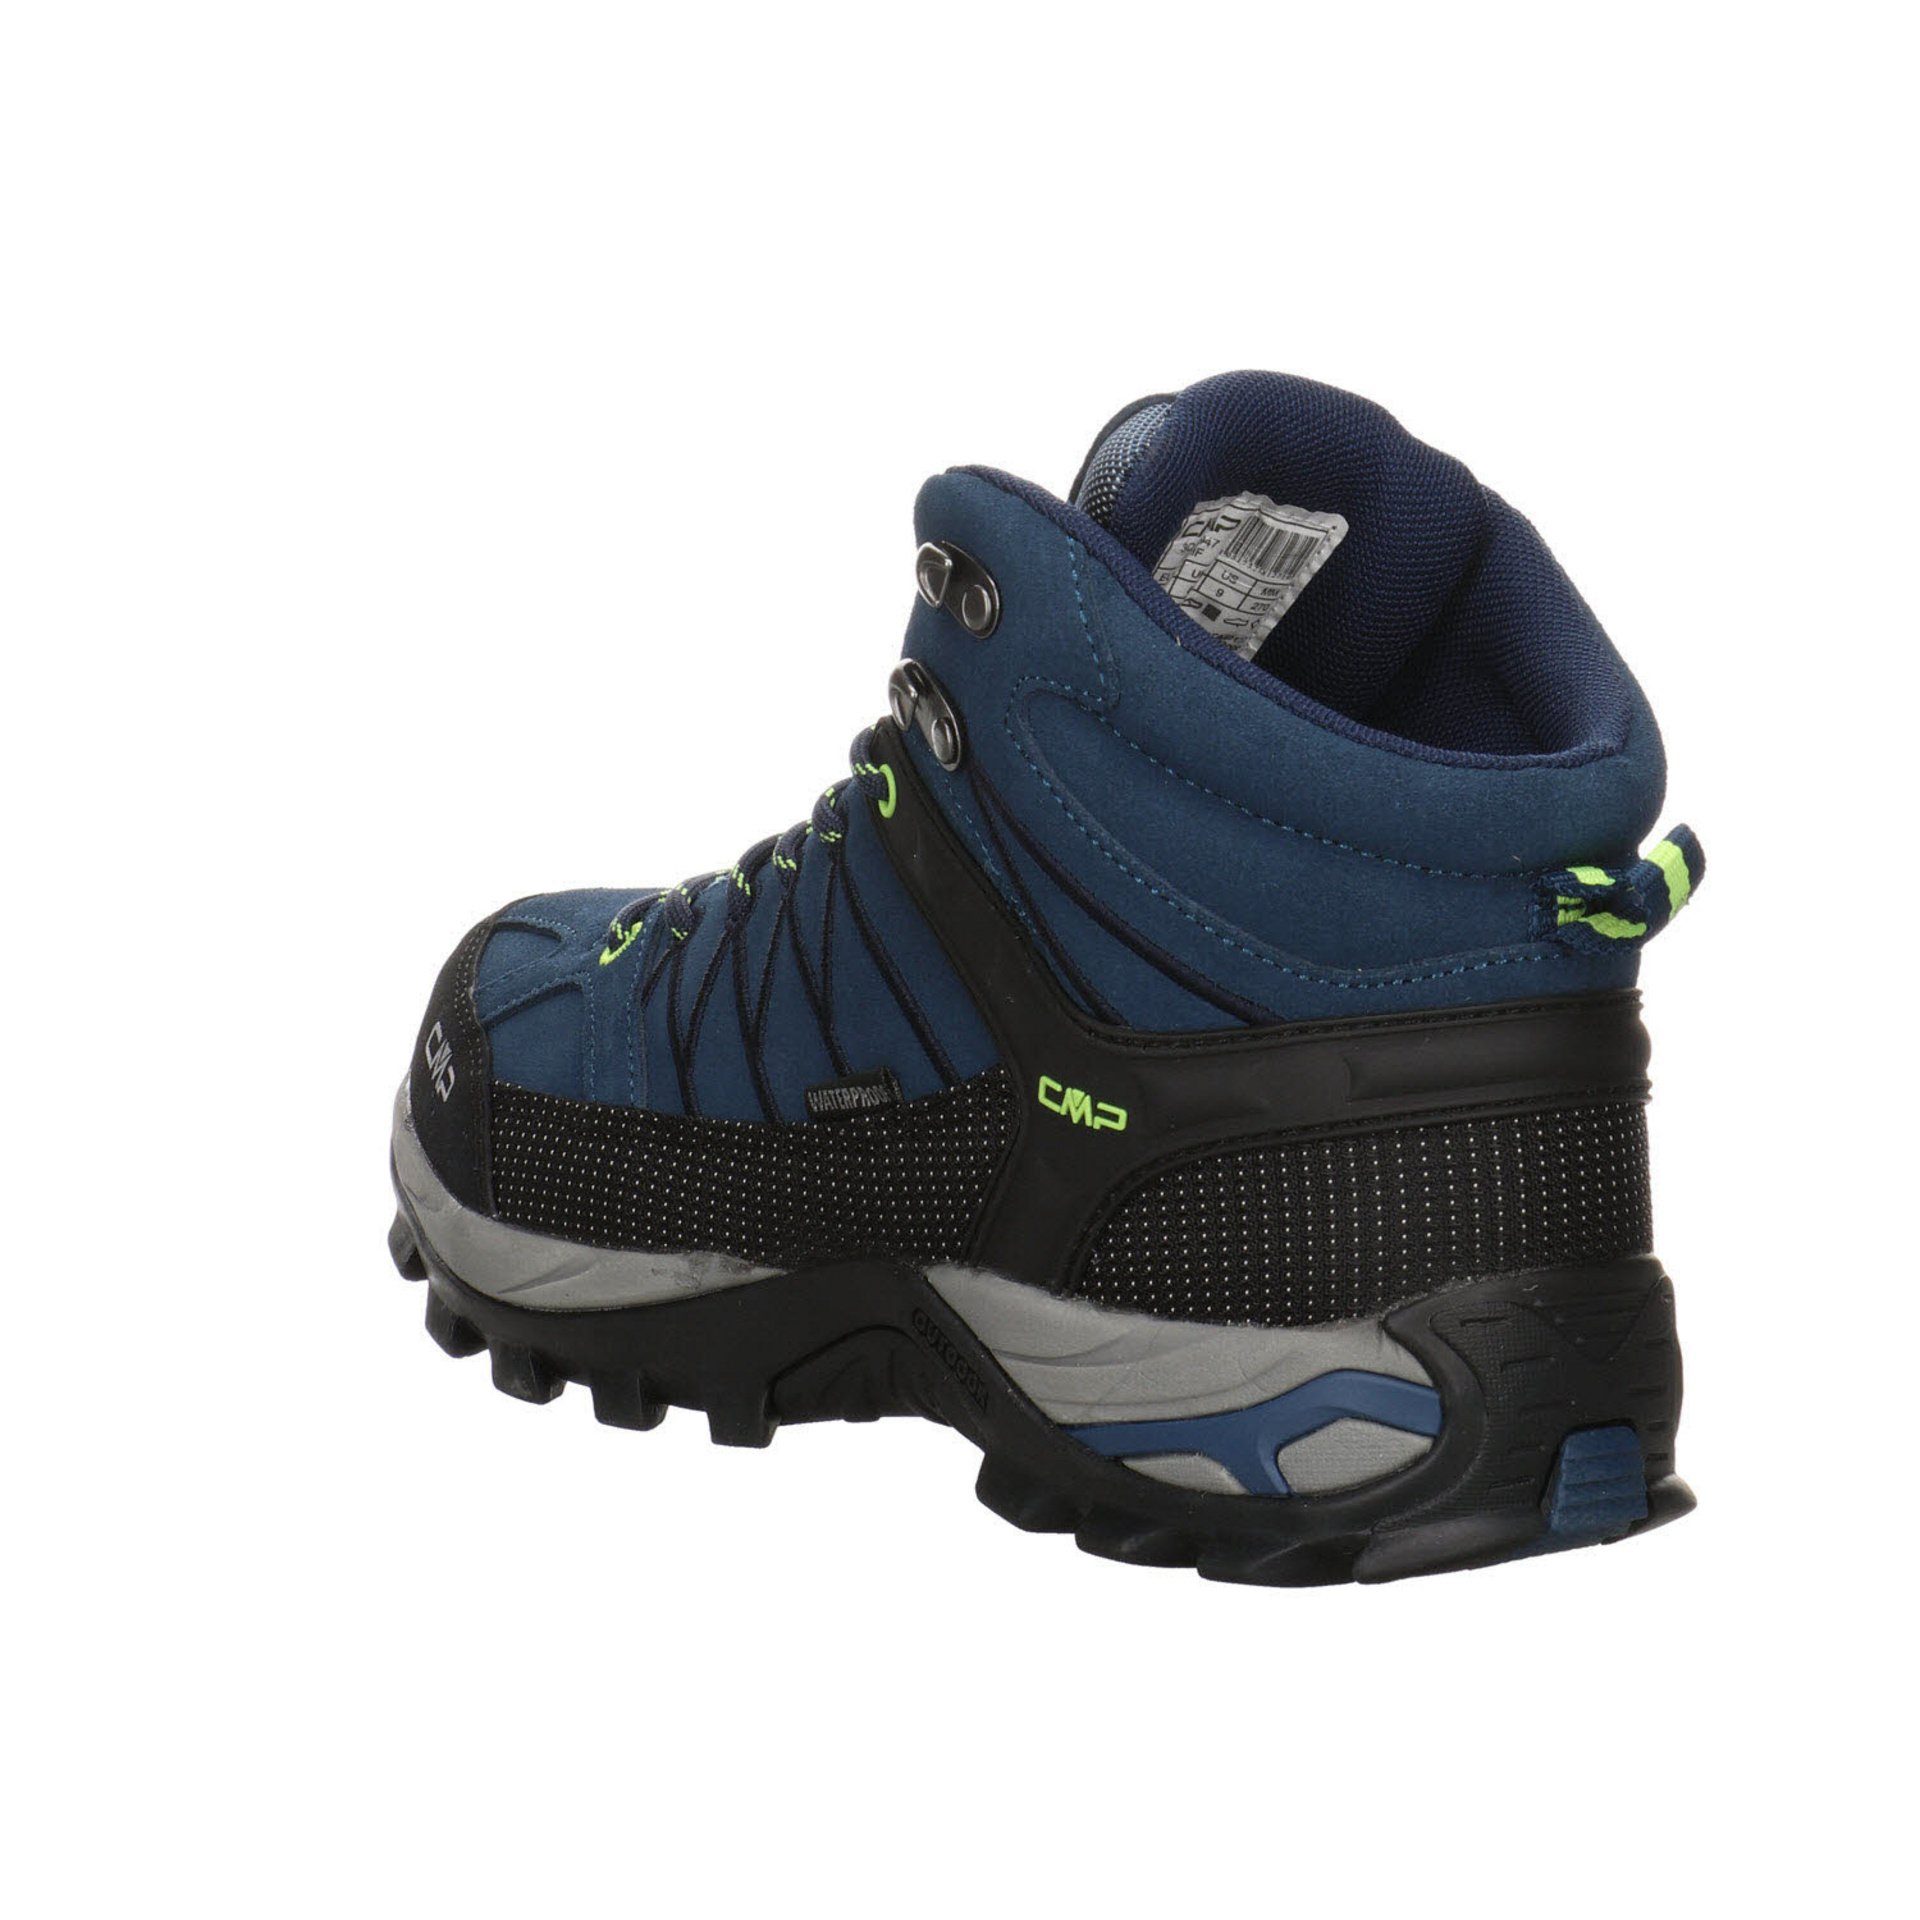 CMP Herren Outdoor FLUO Outdoorschuh Rigel Leder-/Textilkombination Mid Outdoorschuh Schuhe INK-YELLOW BLUE